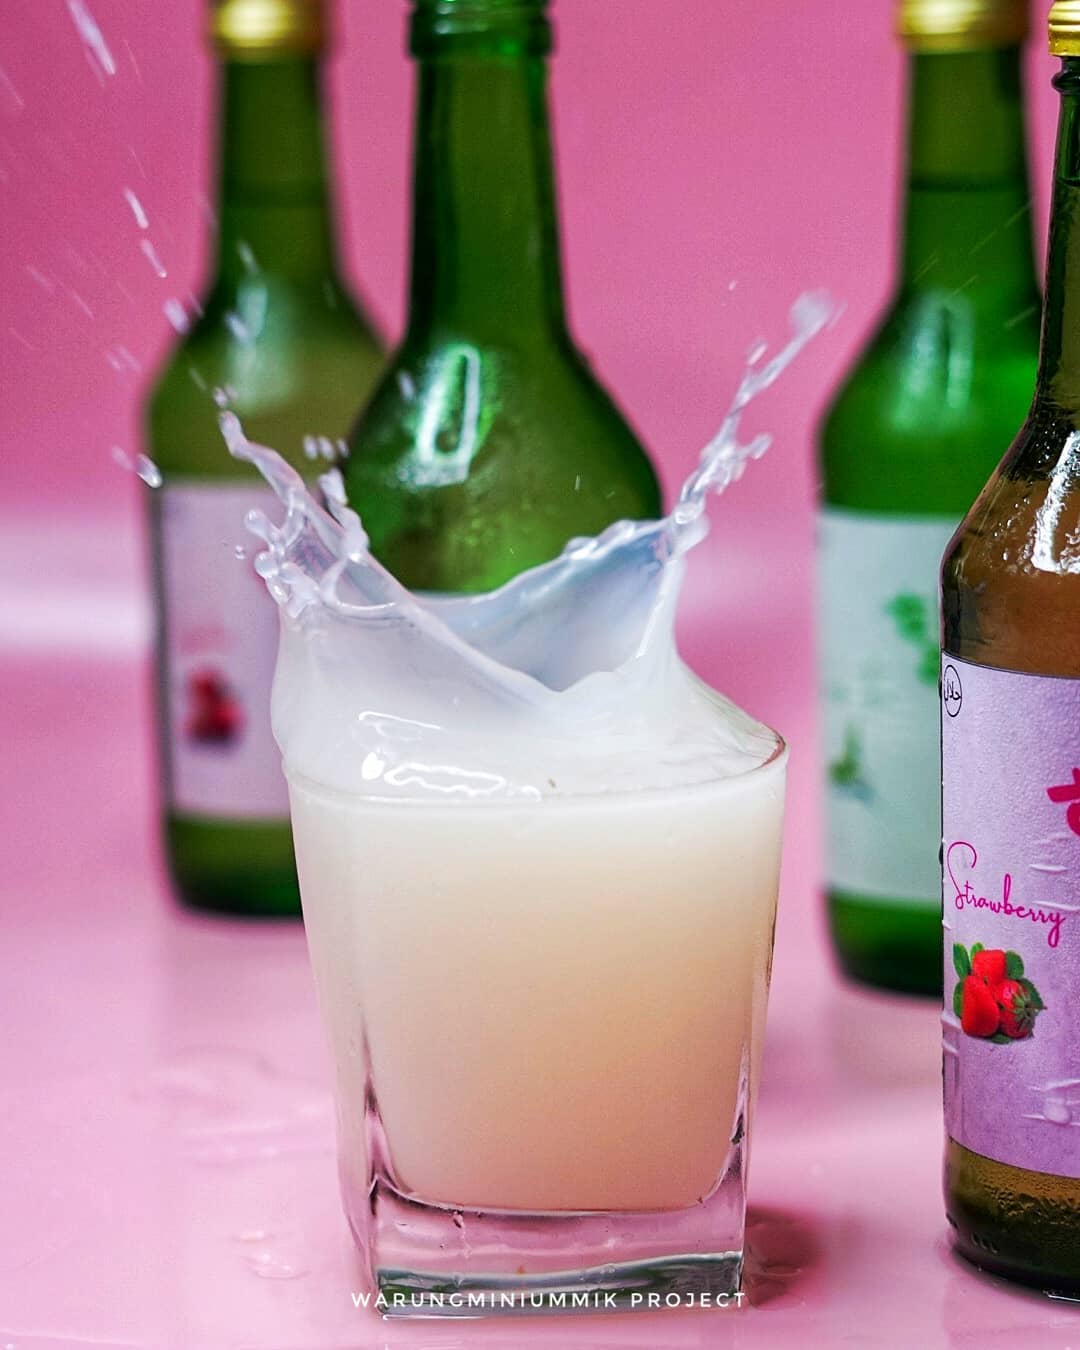 Halal soju - in a glass